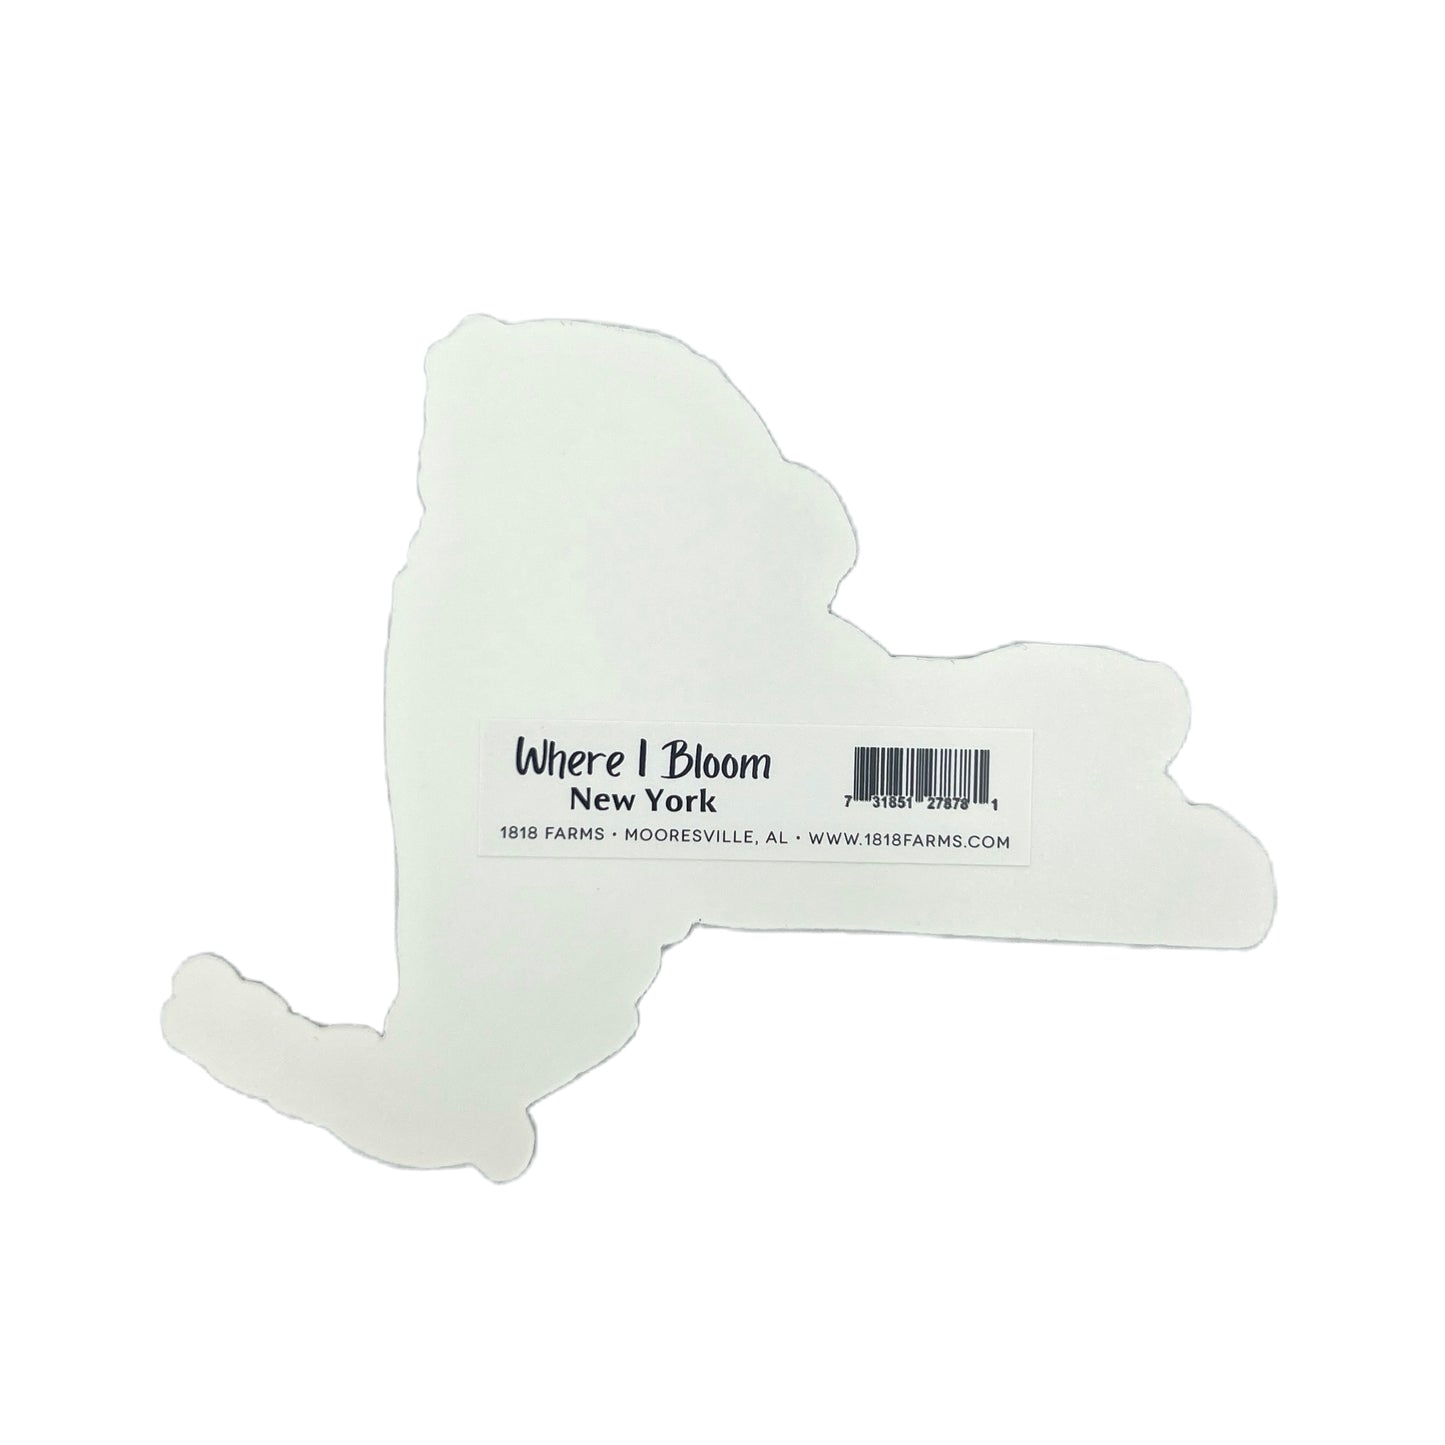 New York Themed Vinyl Sticker  - "Where I Bloom" Collection Vinyl Sticker 1818 Farms   